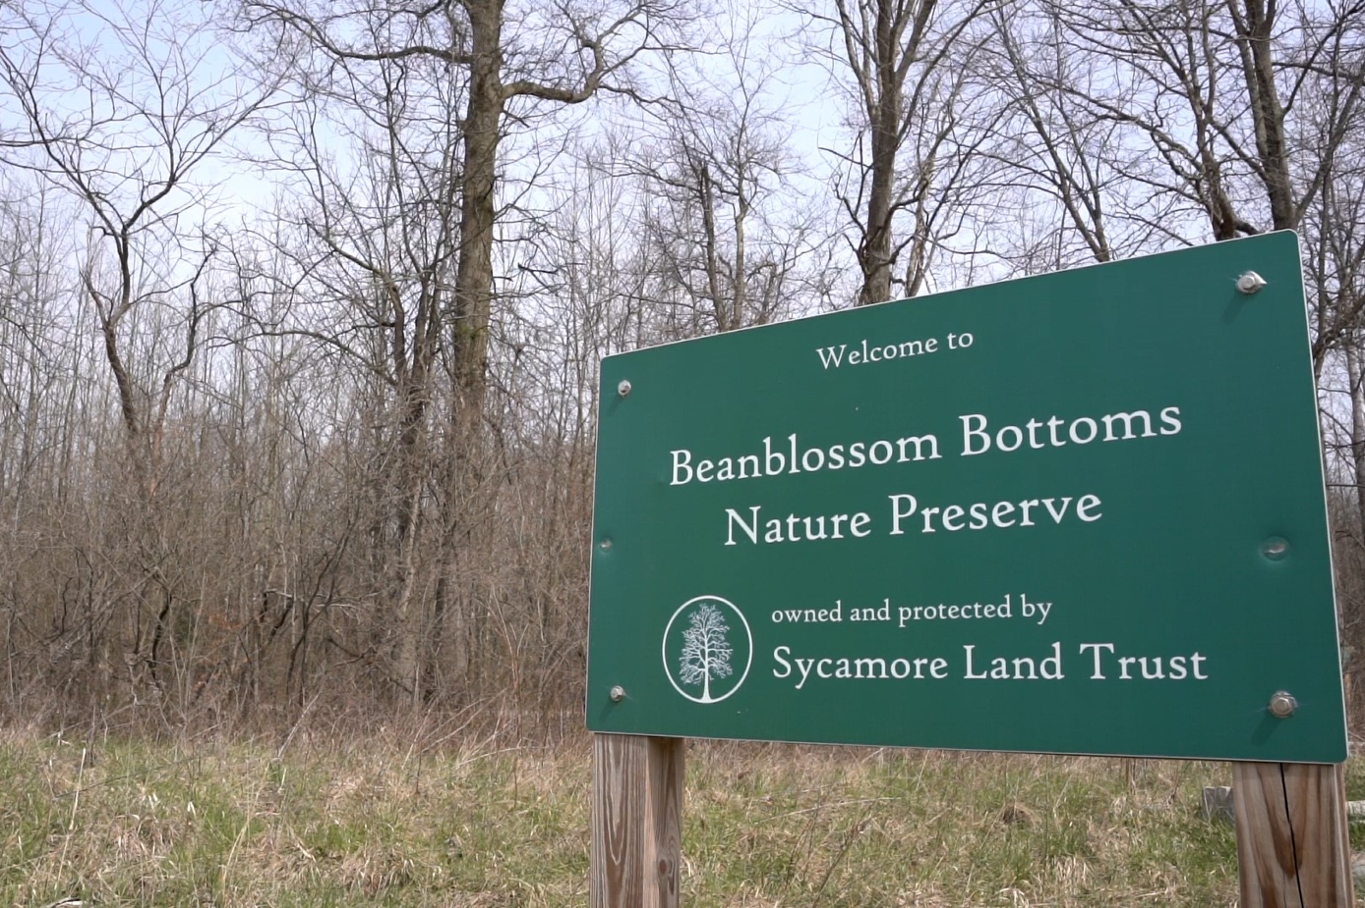 Beanblossombottoms nature preserve